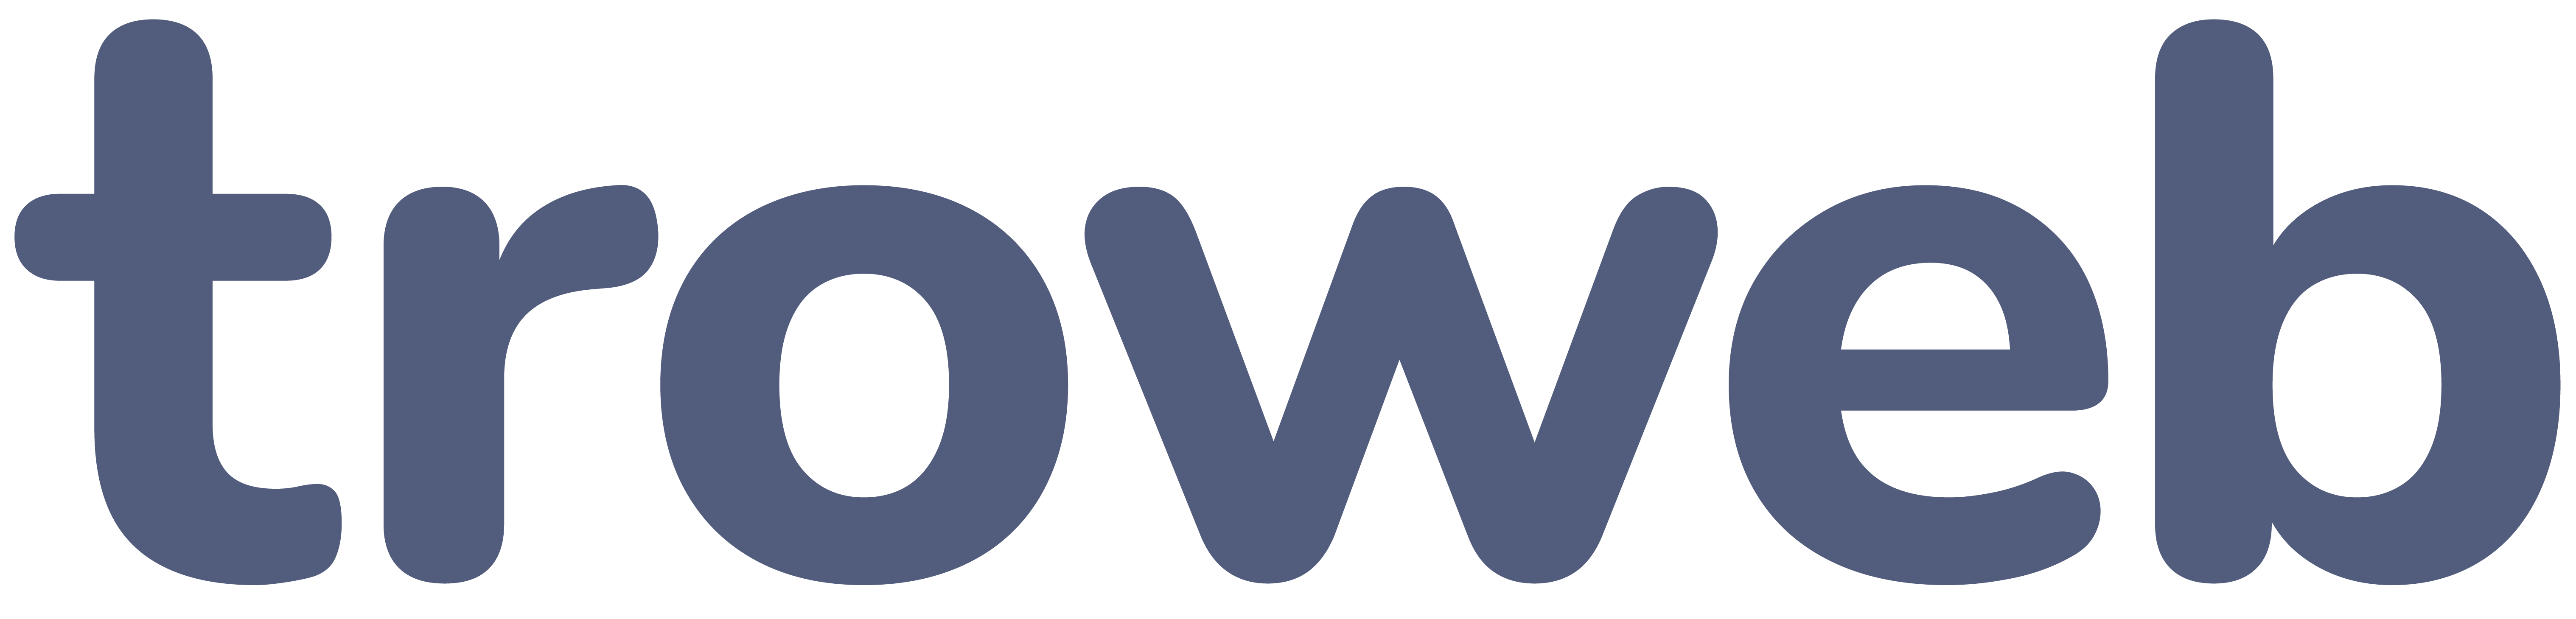 troweb logo type